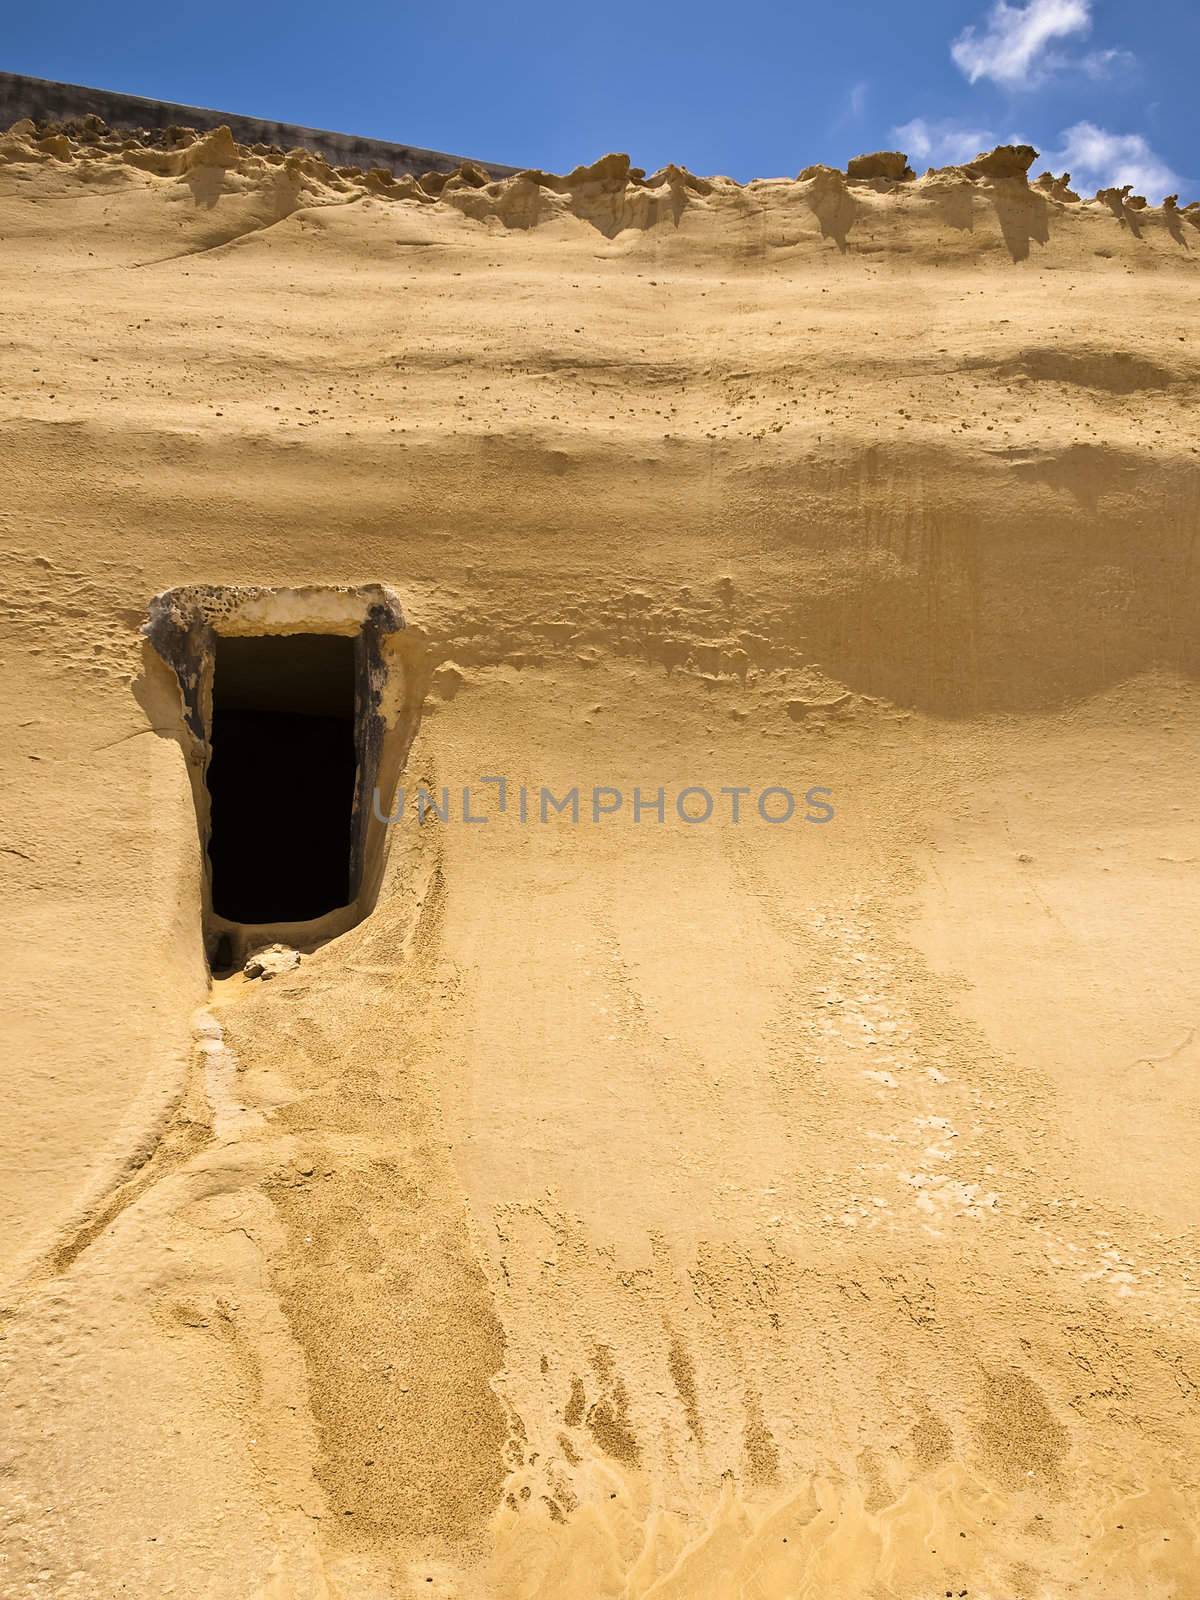 Sandstone Dwelling by PhotoWorks